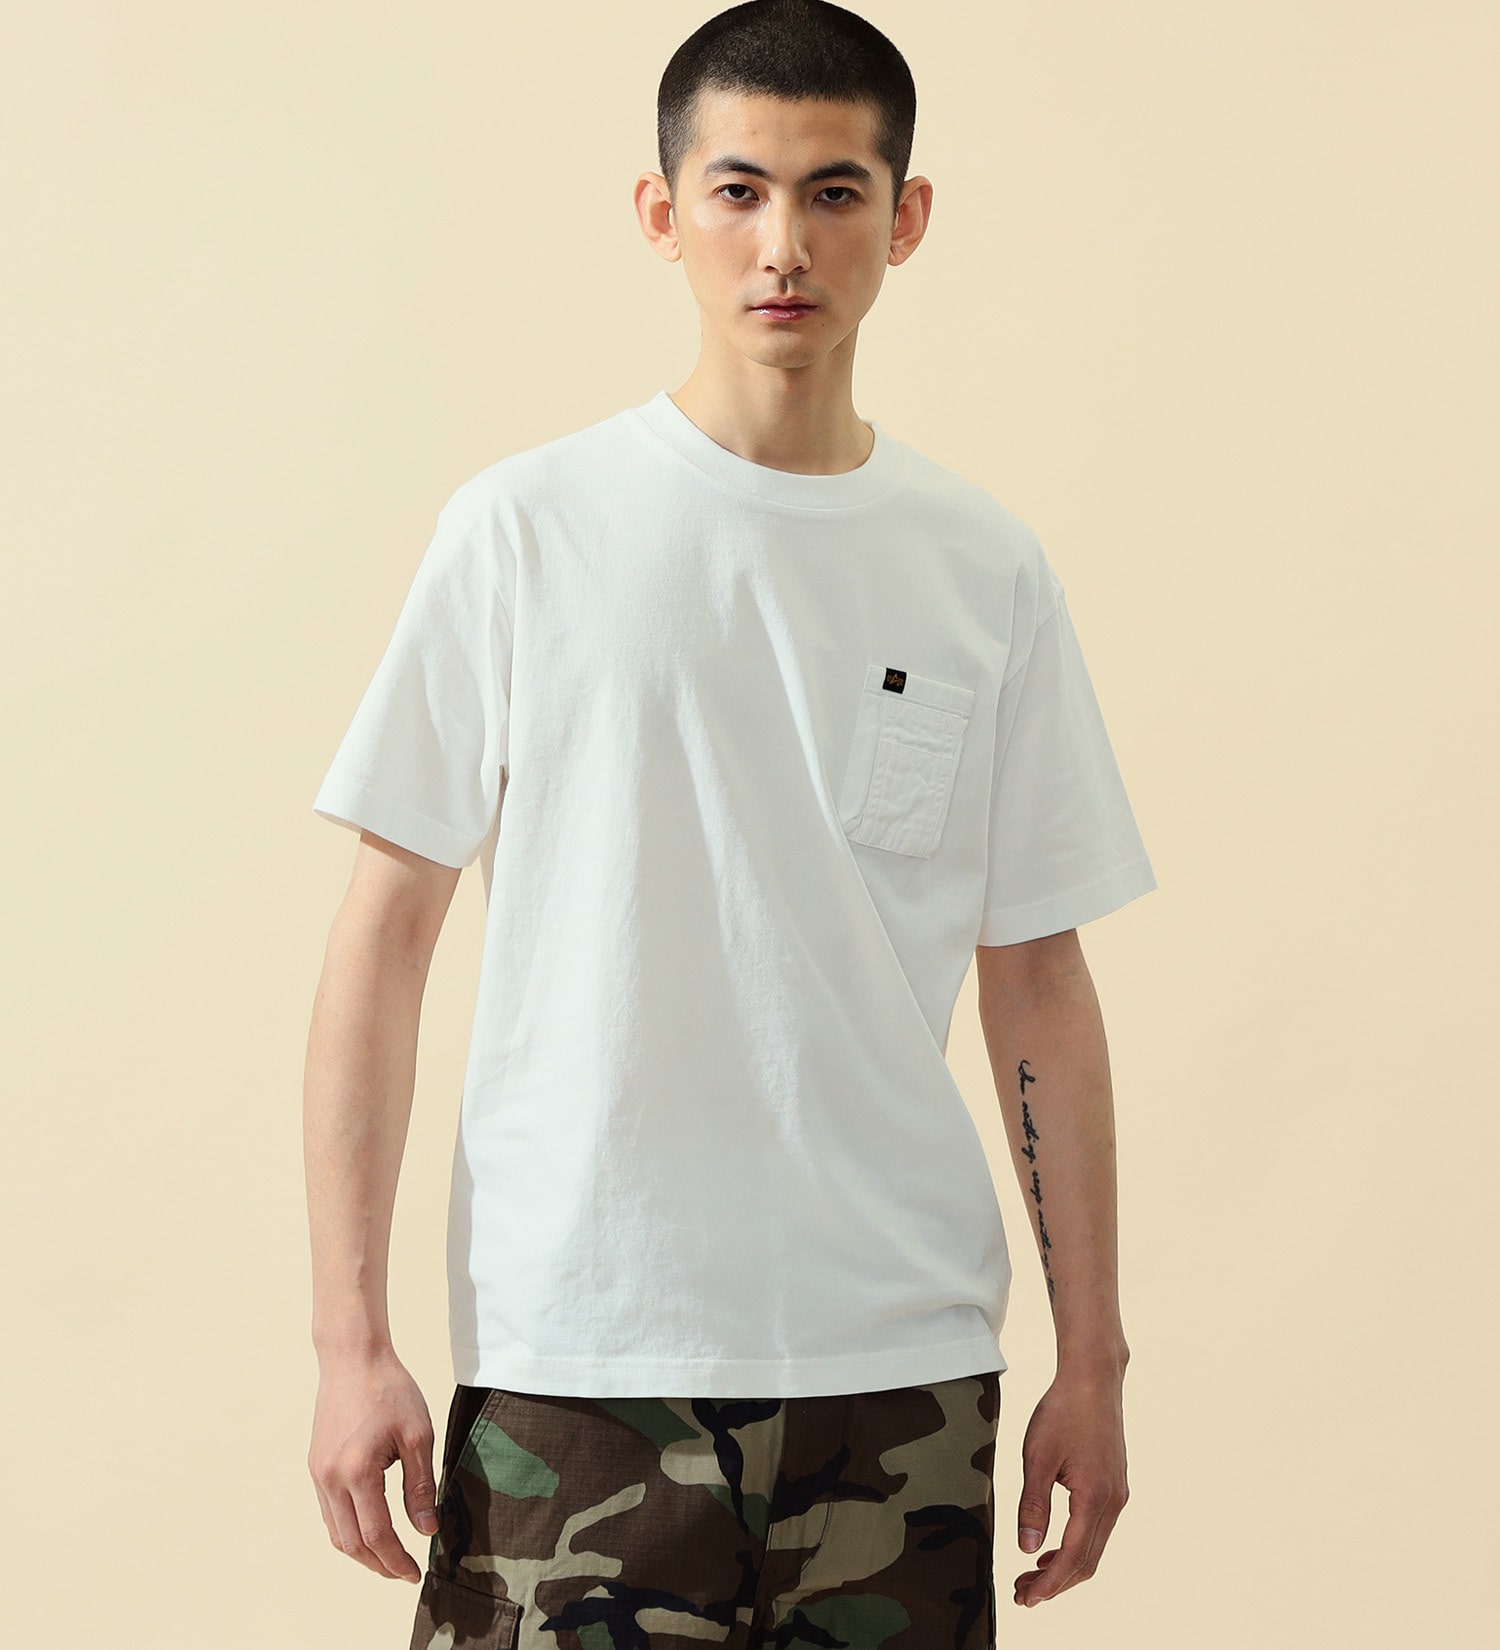 ALPHA(アルファ)のユーティリティーポケットTシャツ 半袖|トップス/Tシャツ/カットソー/メンズ|ホワイト